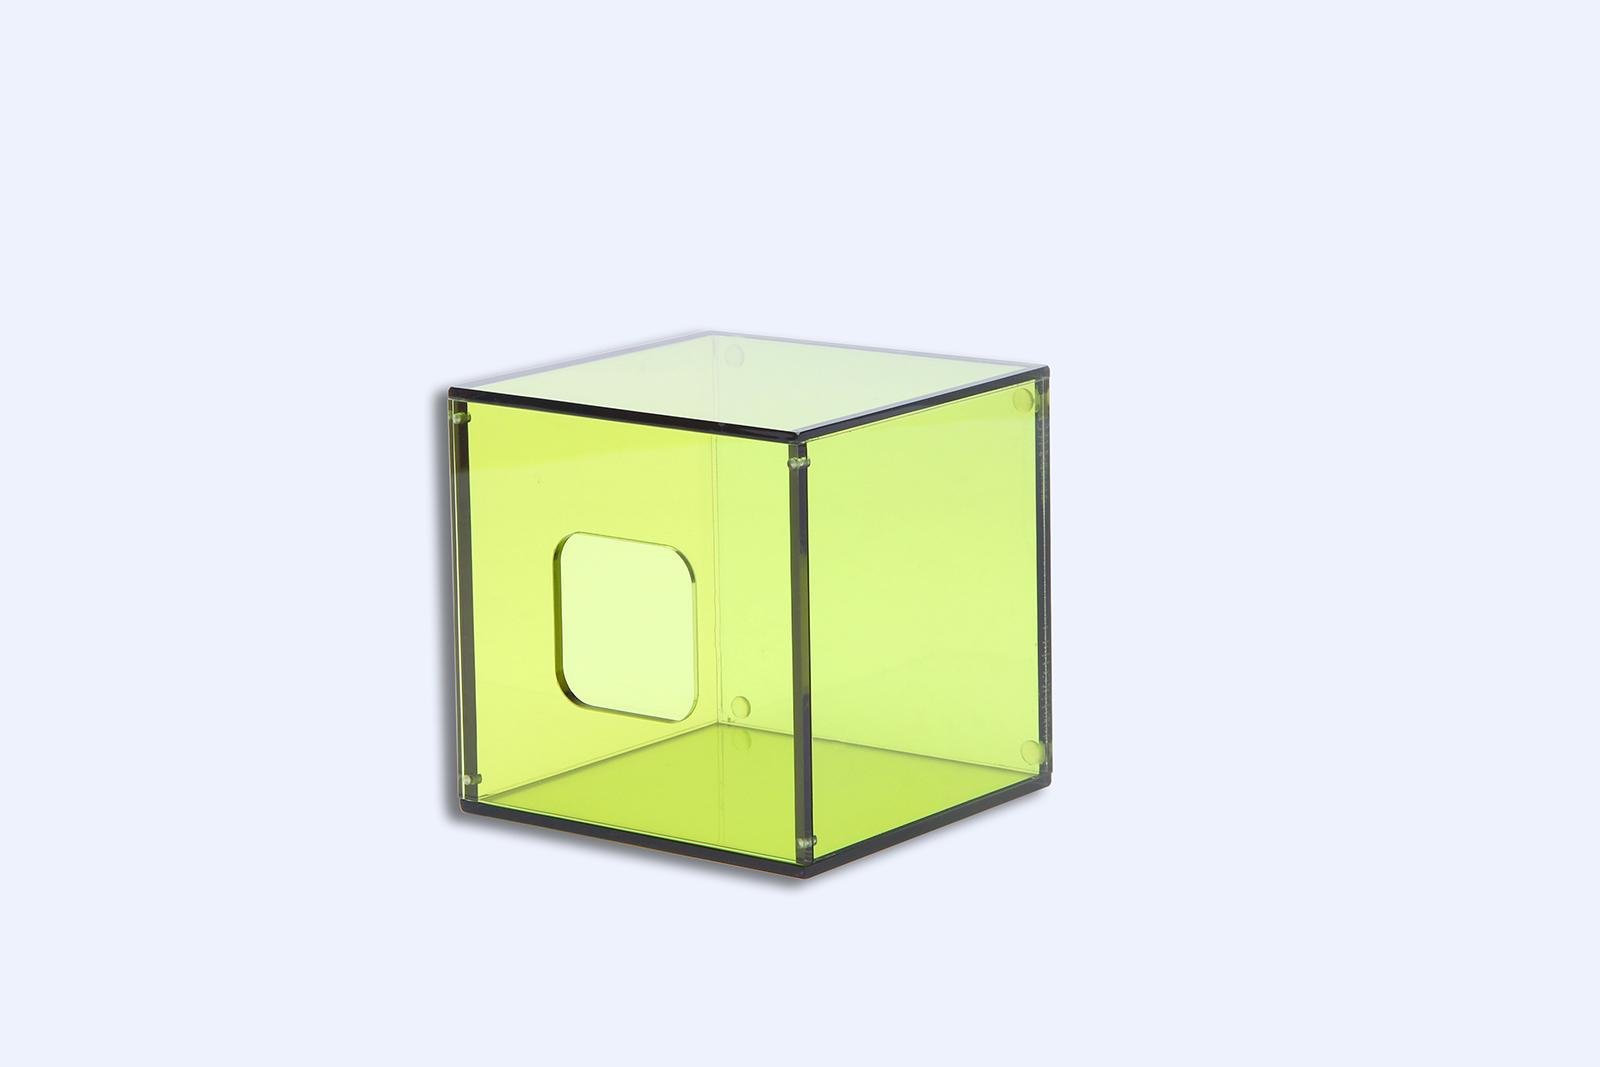 Transparent clear perspex box